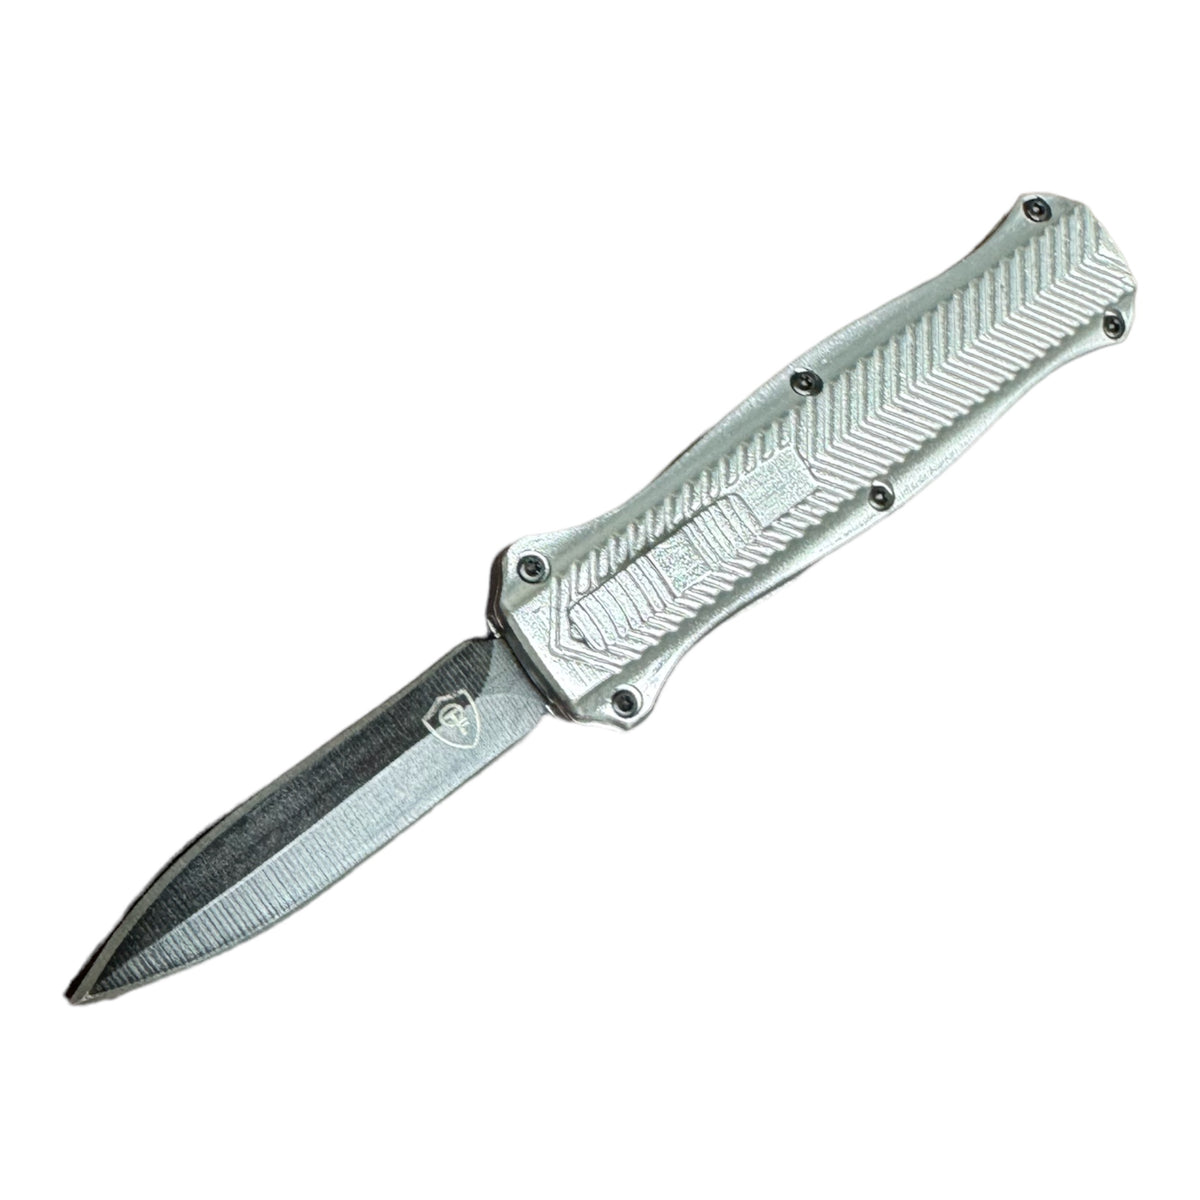 Knives Under $100 - Infinity Knife Company